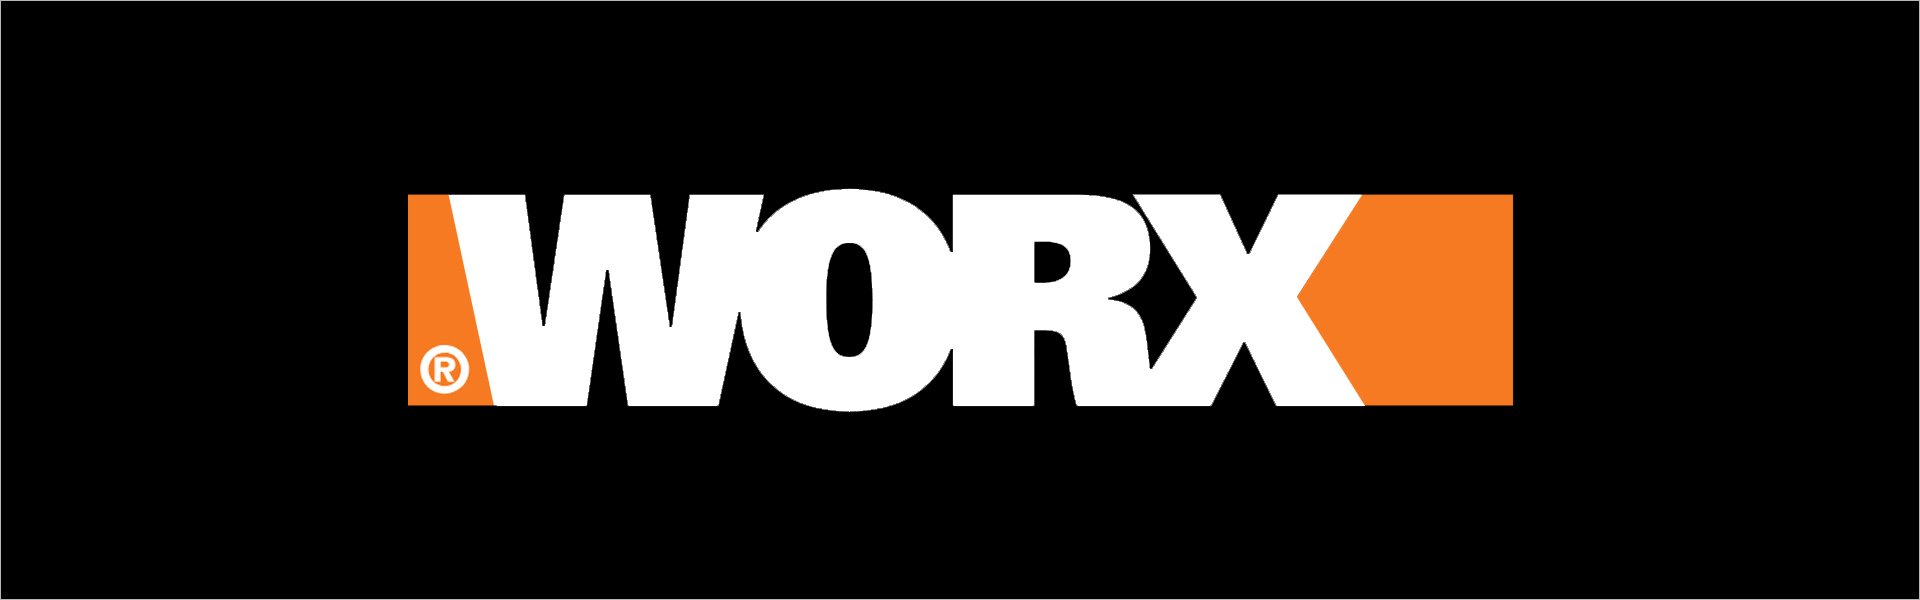 WORX WX254.4 Worx